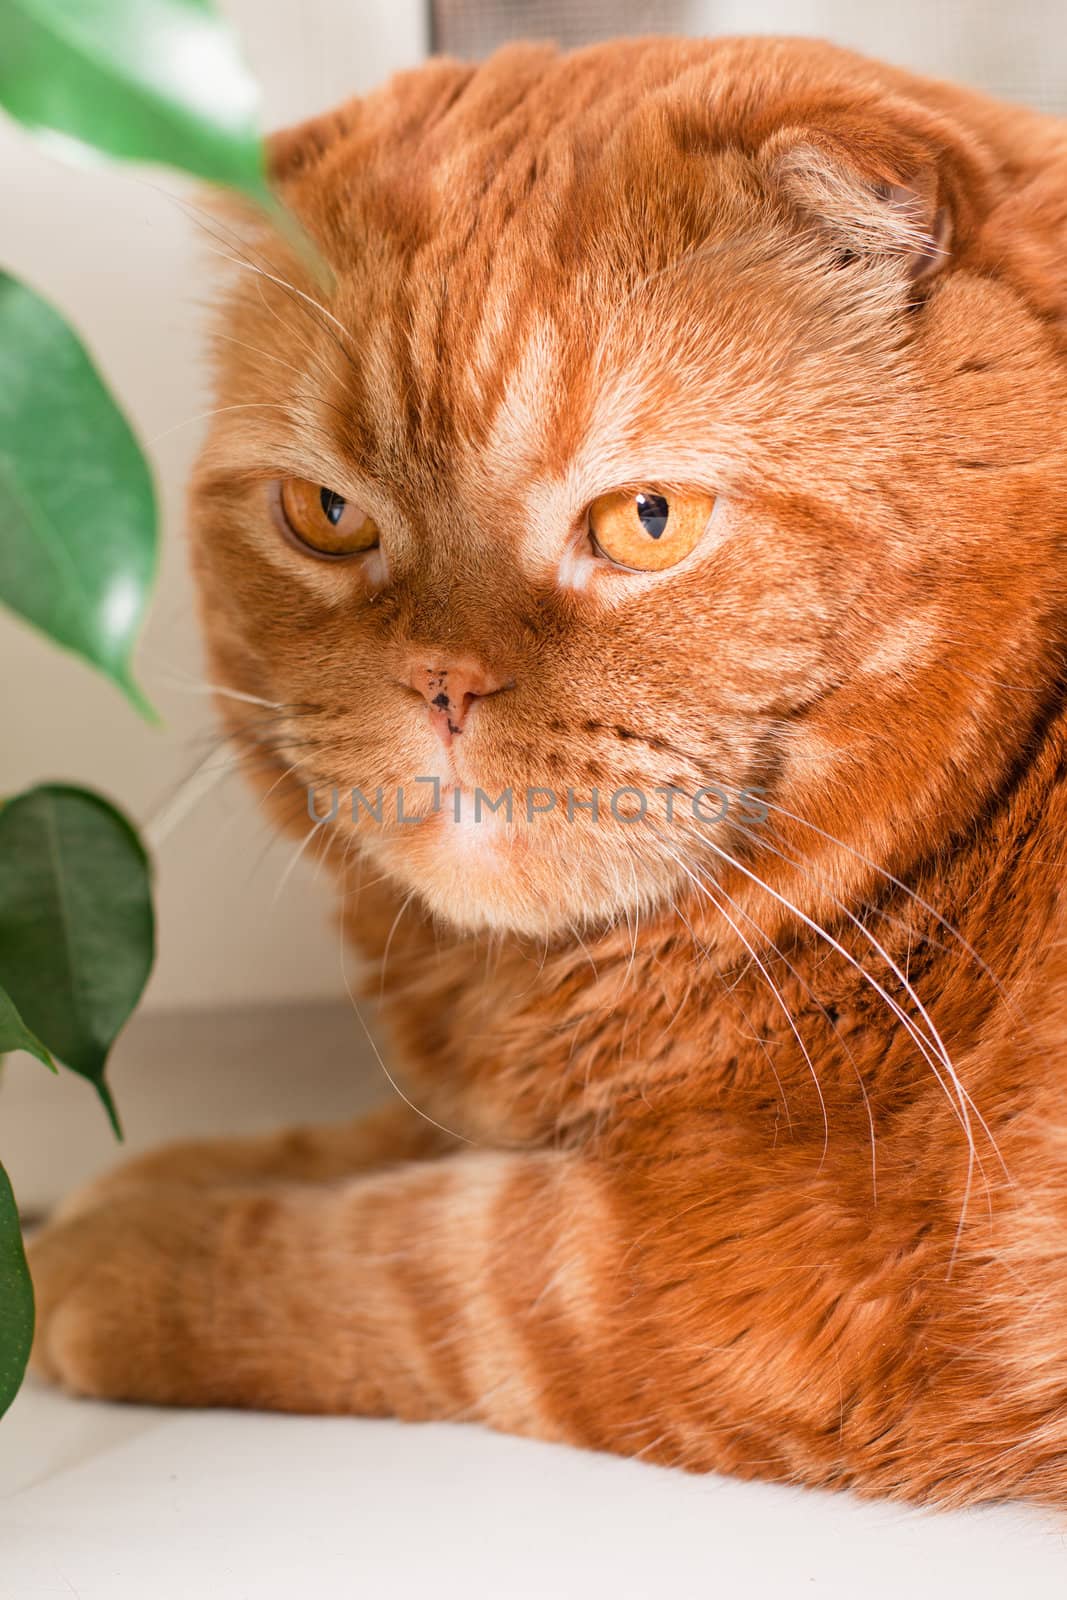 A scottish fold cat sitting on a windowsill between houseplants
